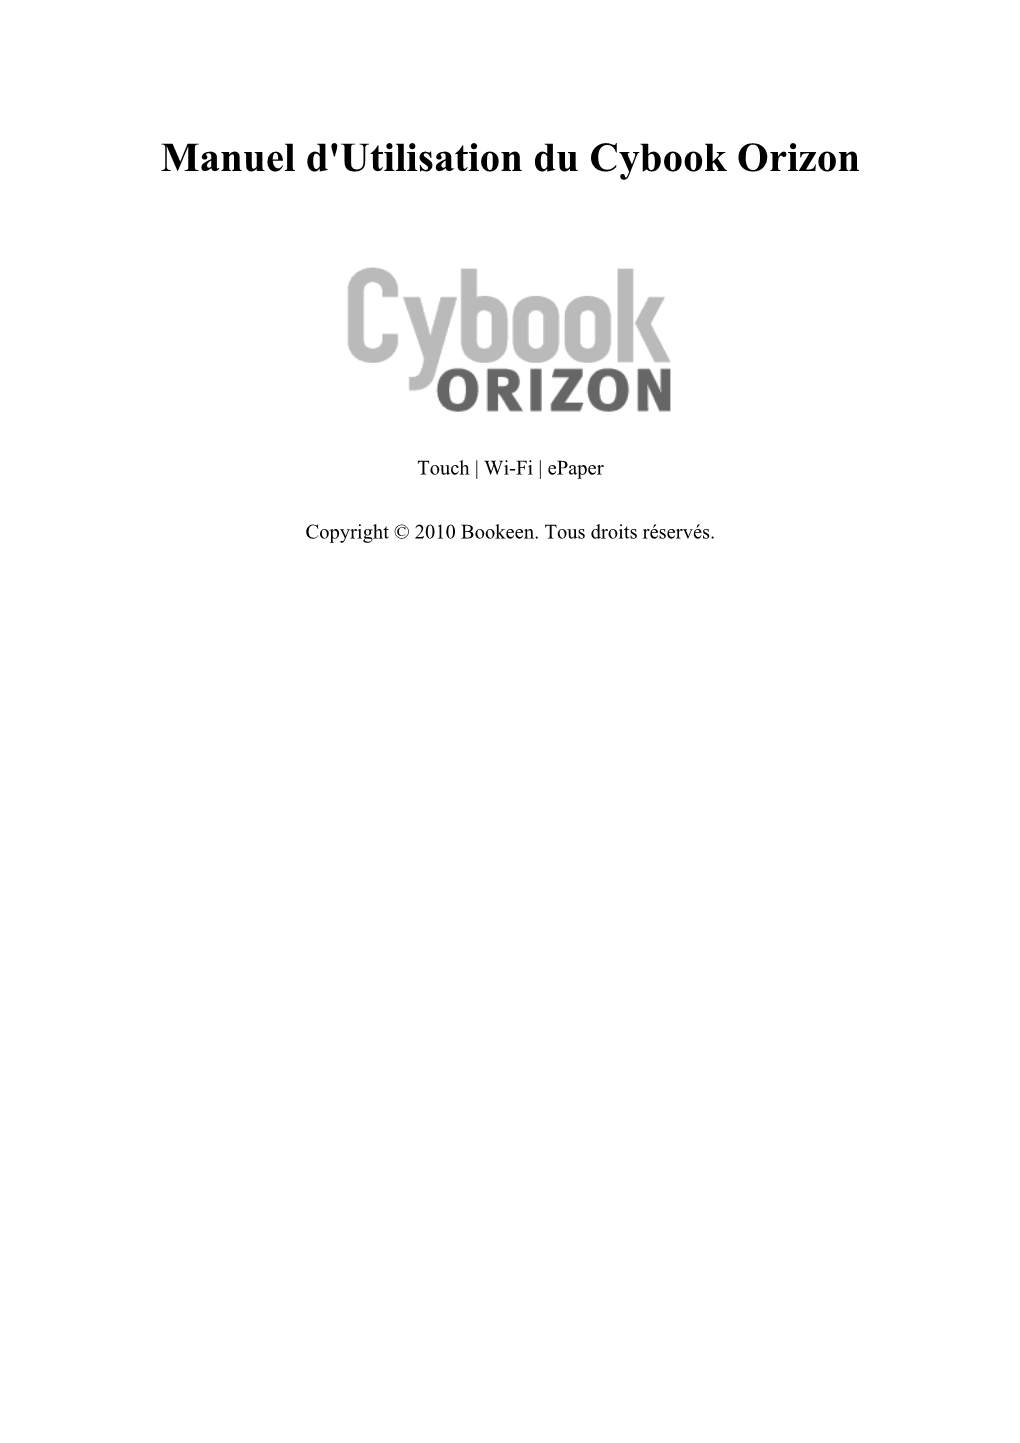 Manuel D'utilisation Du Cybook Orizon